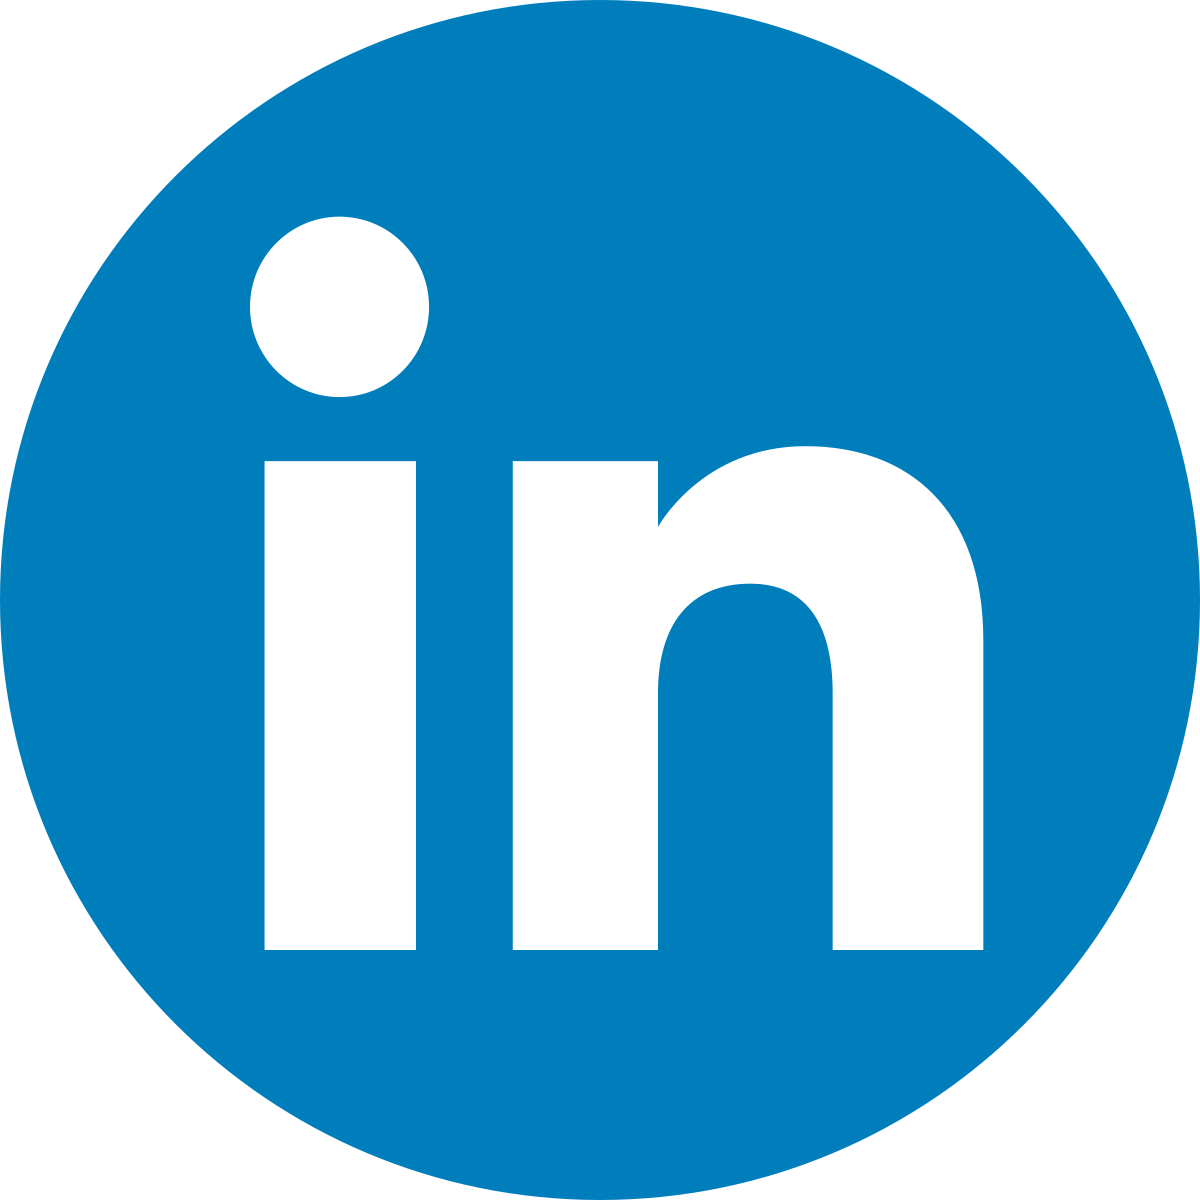 Follow APV on LinkedIn